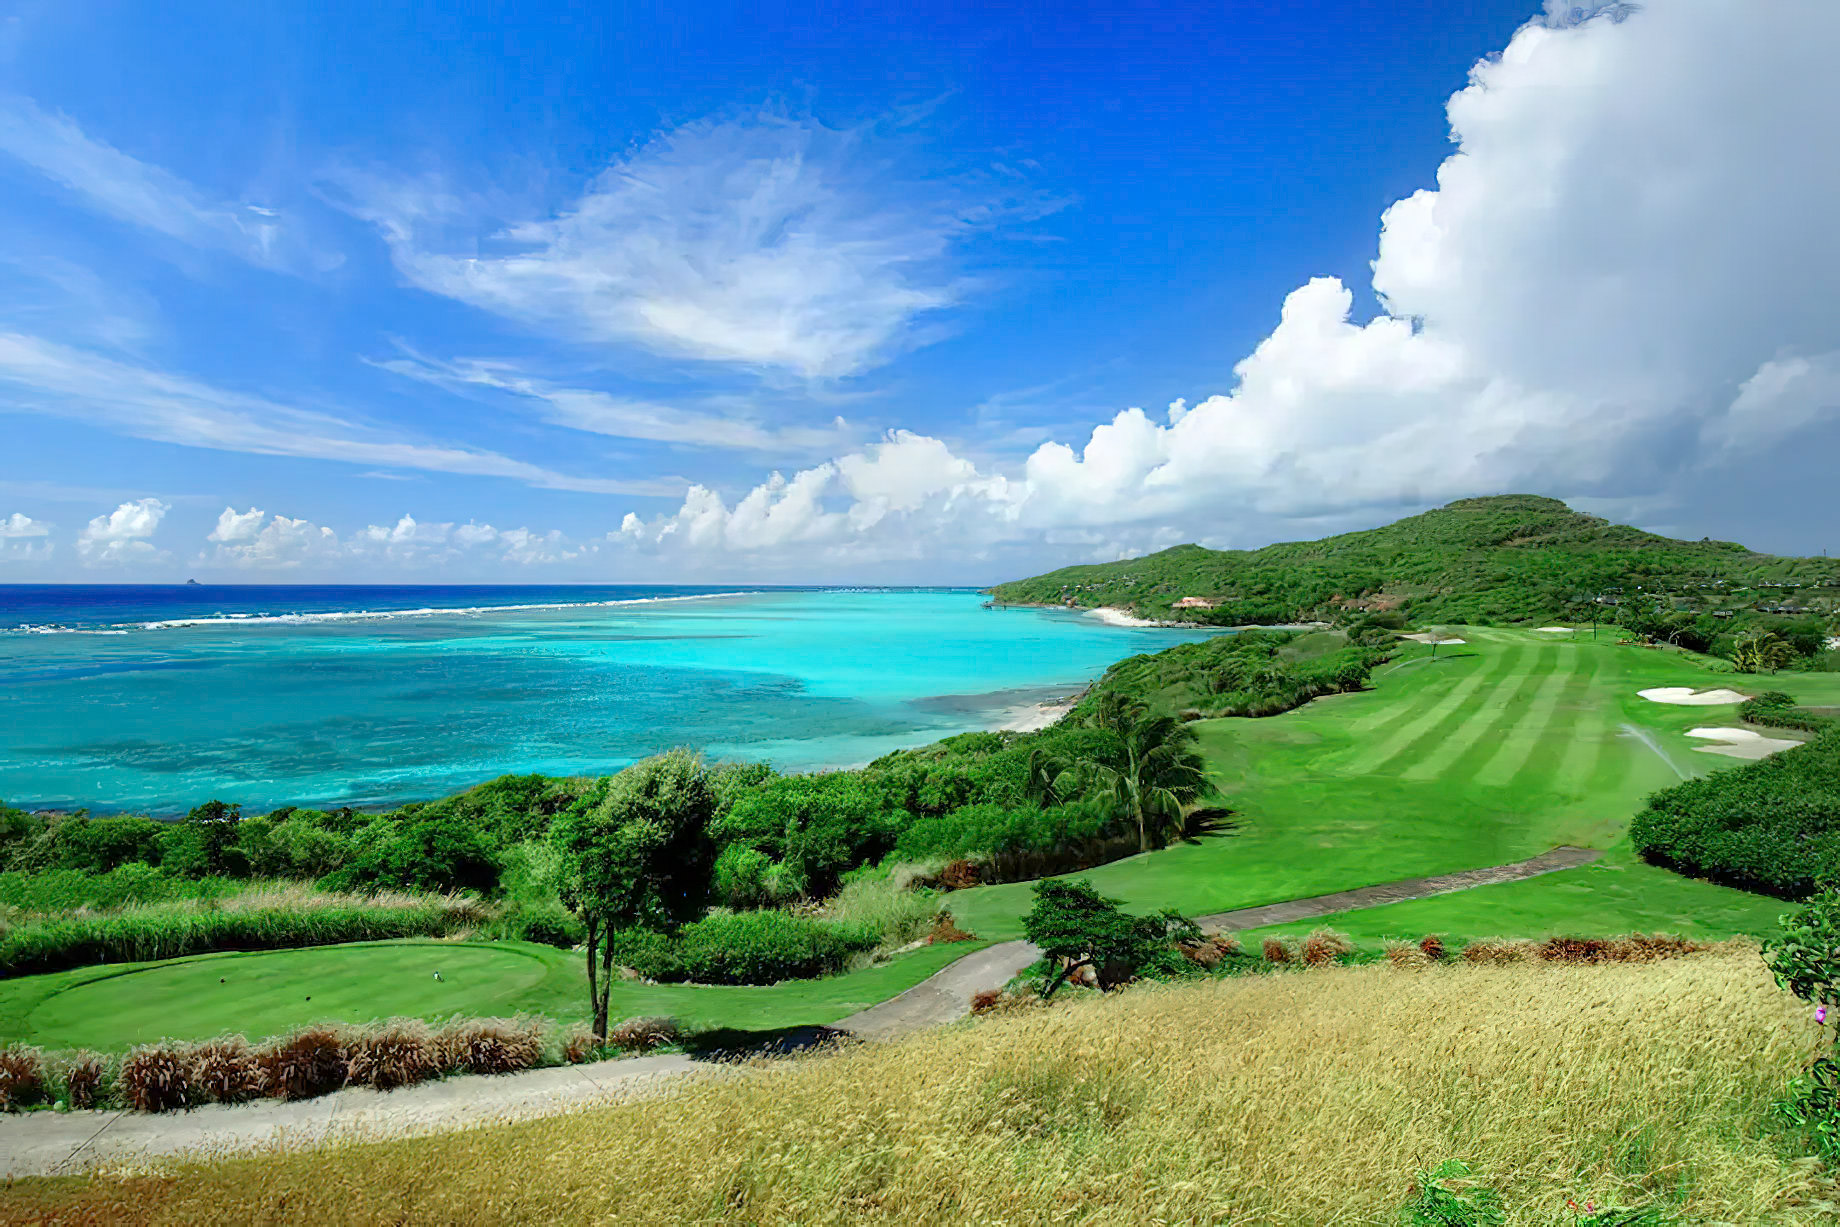 Mandarin Oriental, Canouan Island Resort - Saint Vincent and the Grenadines - Island Golf Course Ocean View